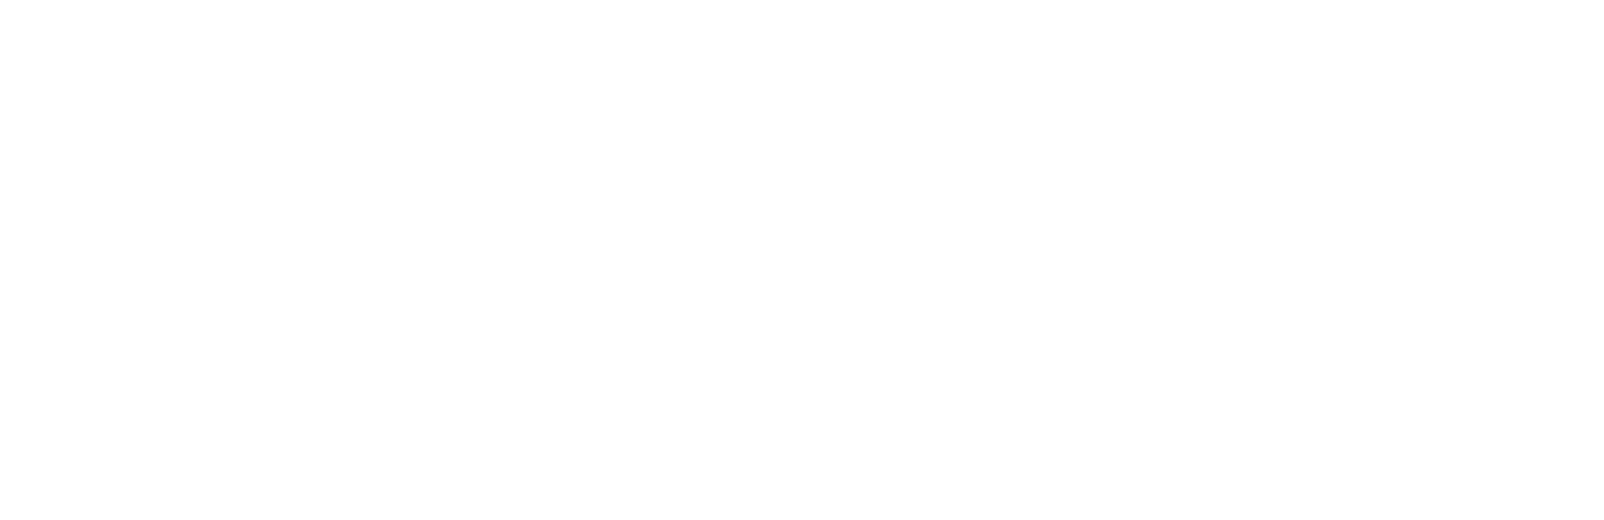 6G Summit Networking Lisbon